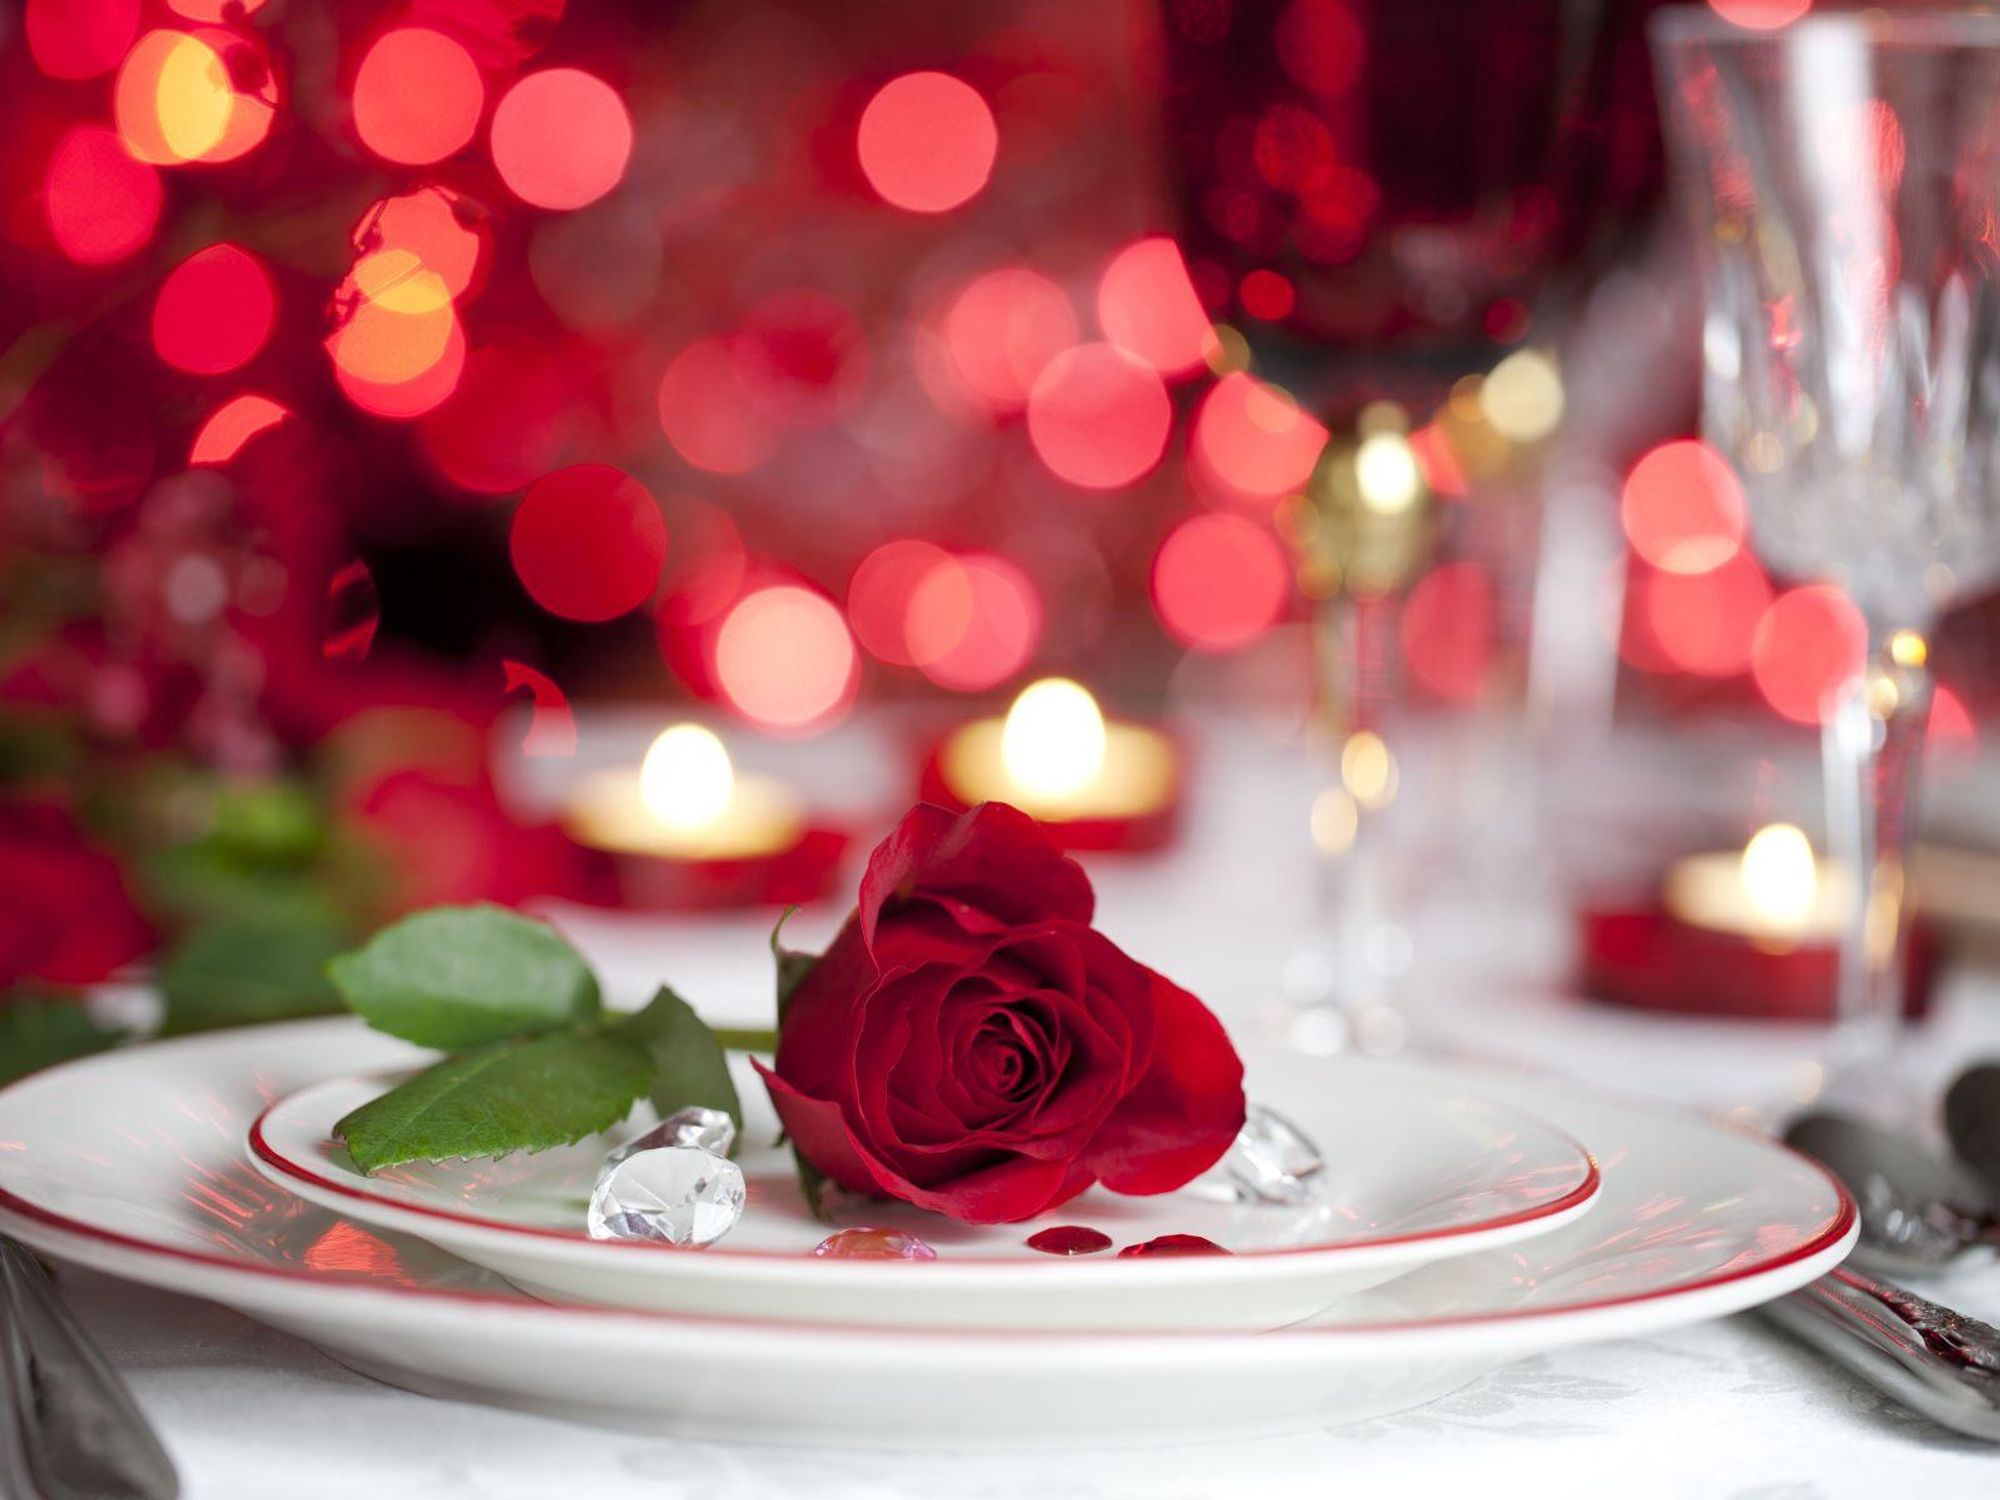 The best Fort Worth restaurants to celebrate Valentine's Day 2023